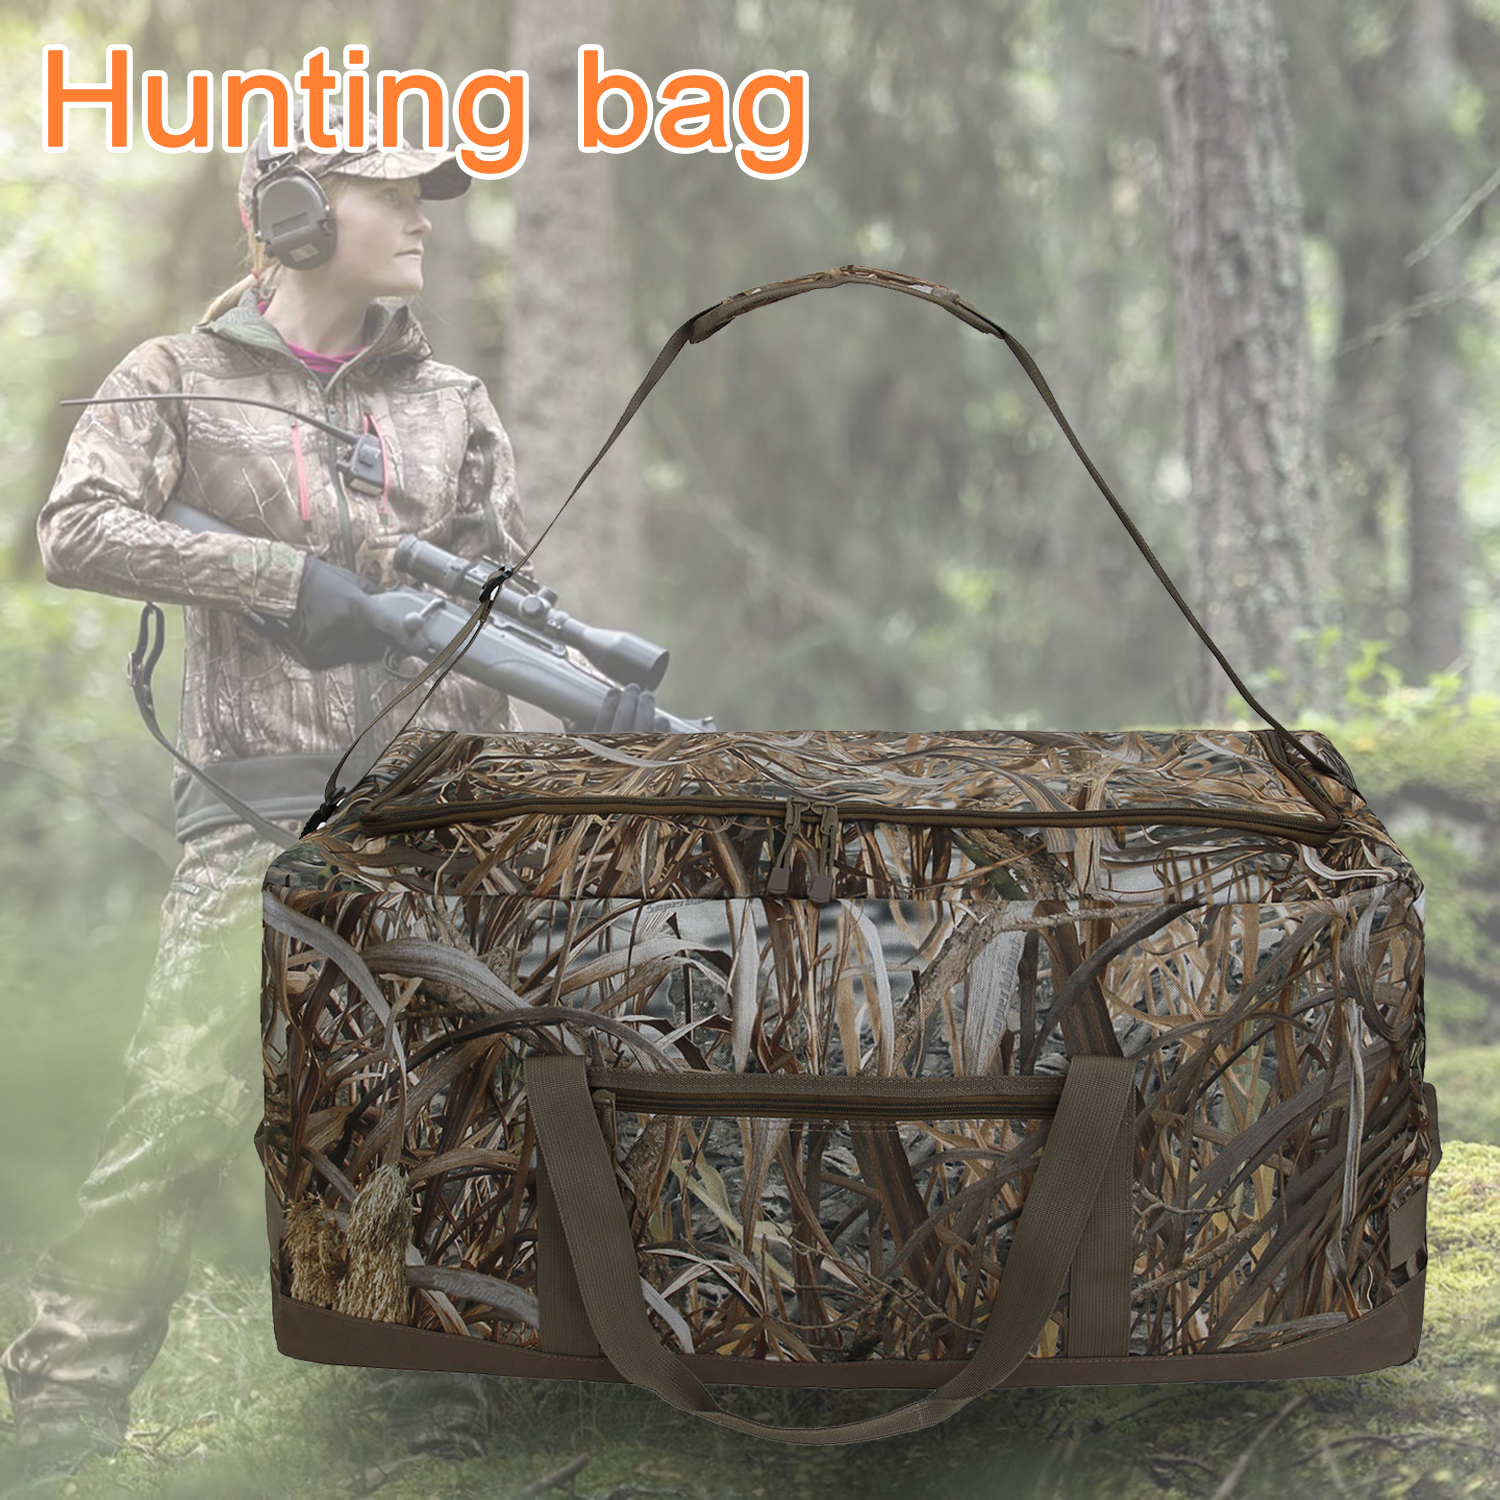 HD-1 hunting duffle bag5